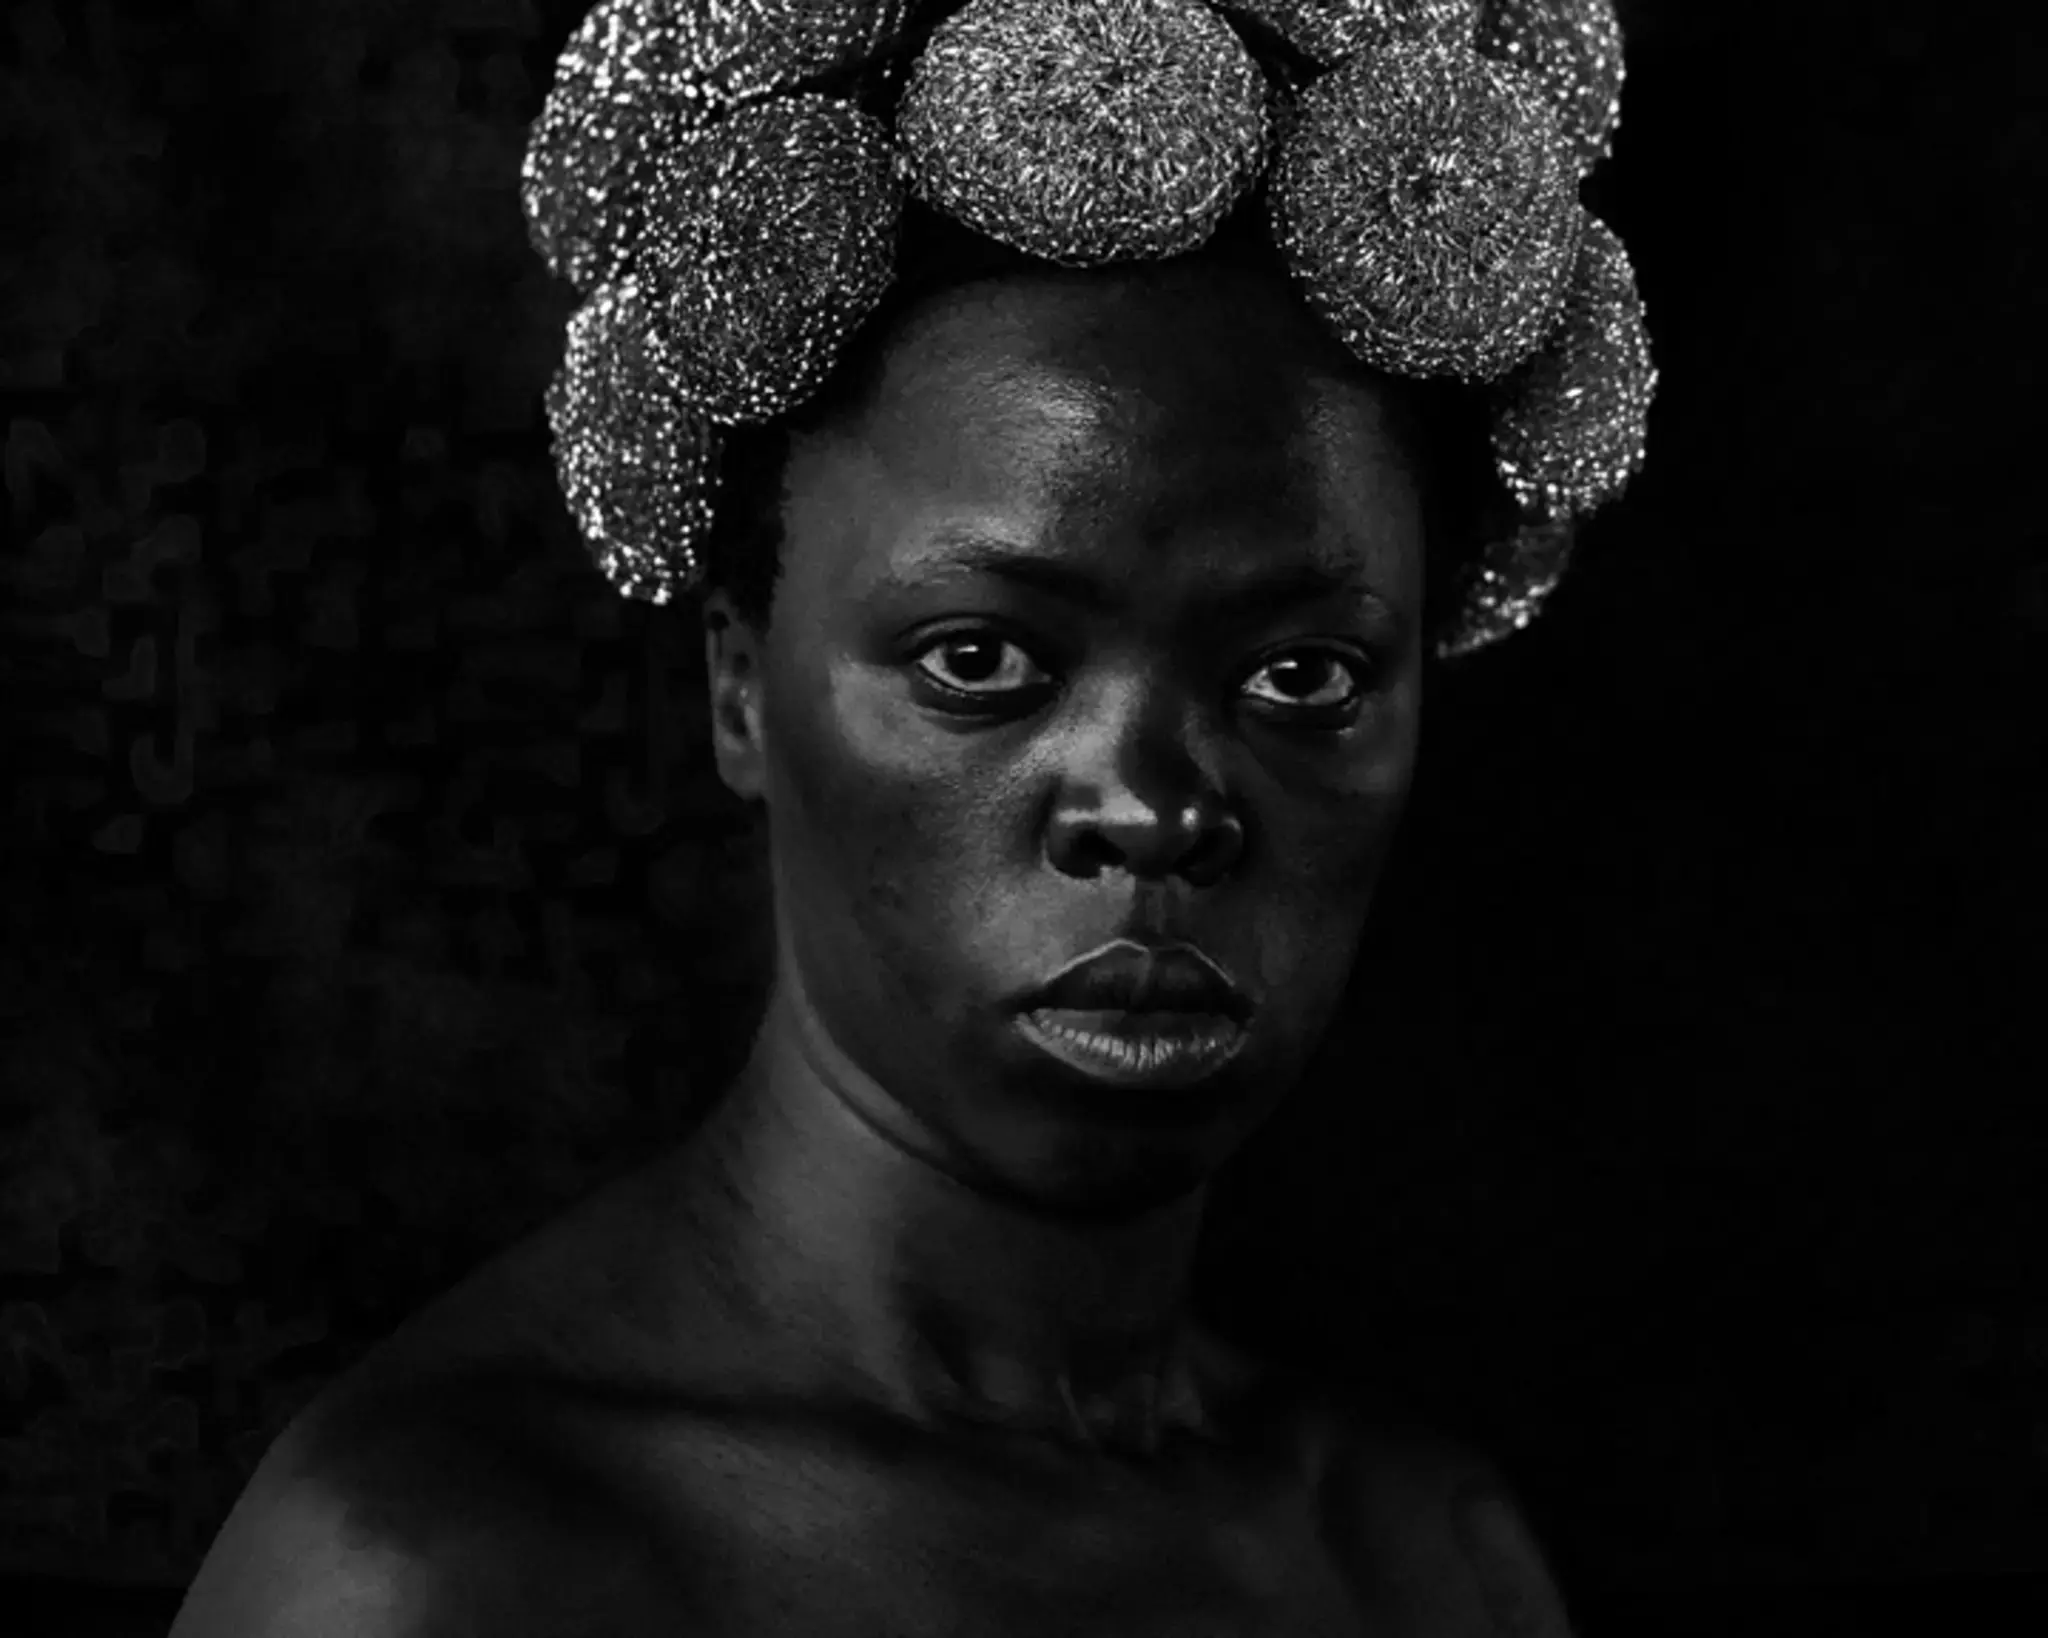 Zanele Muholi, Bester V, 2015, self portrait, Mayotte. Photo courtesy of the artist.